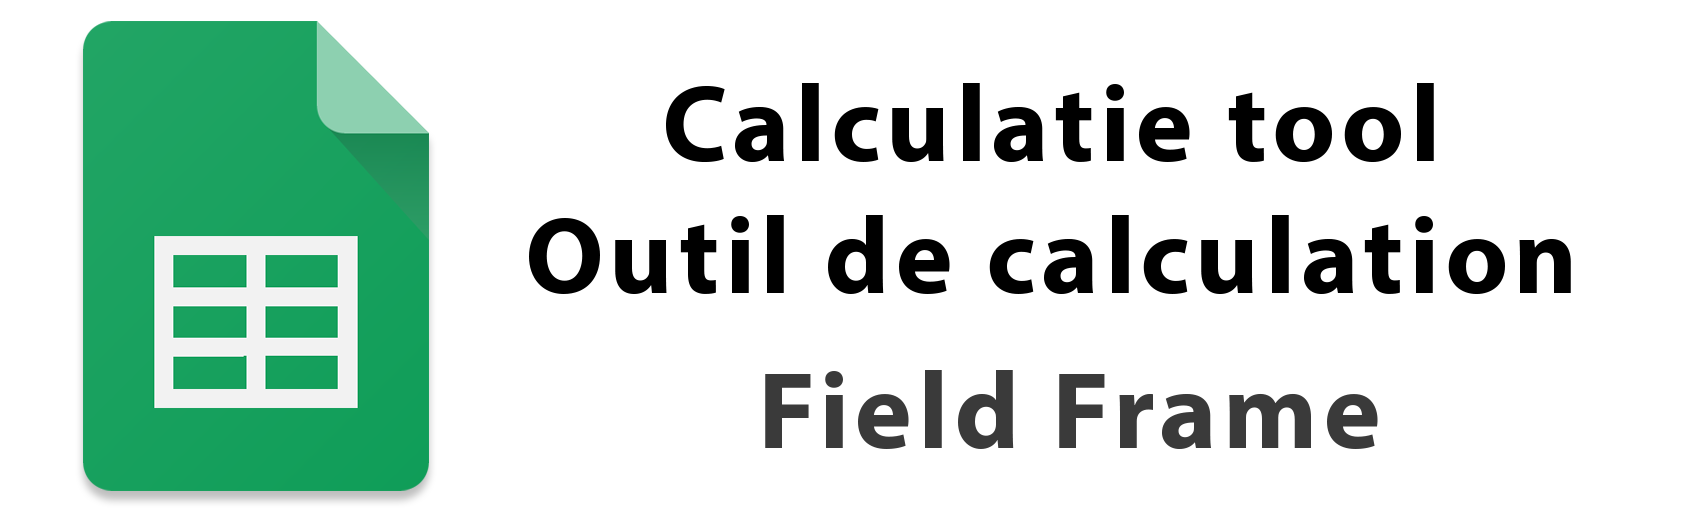 Calculatie tool-Field Frame.png